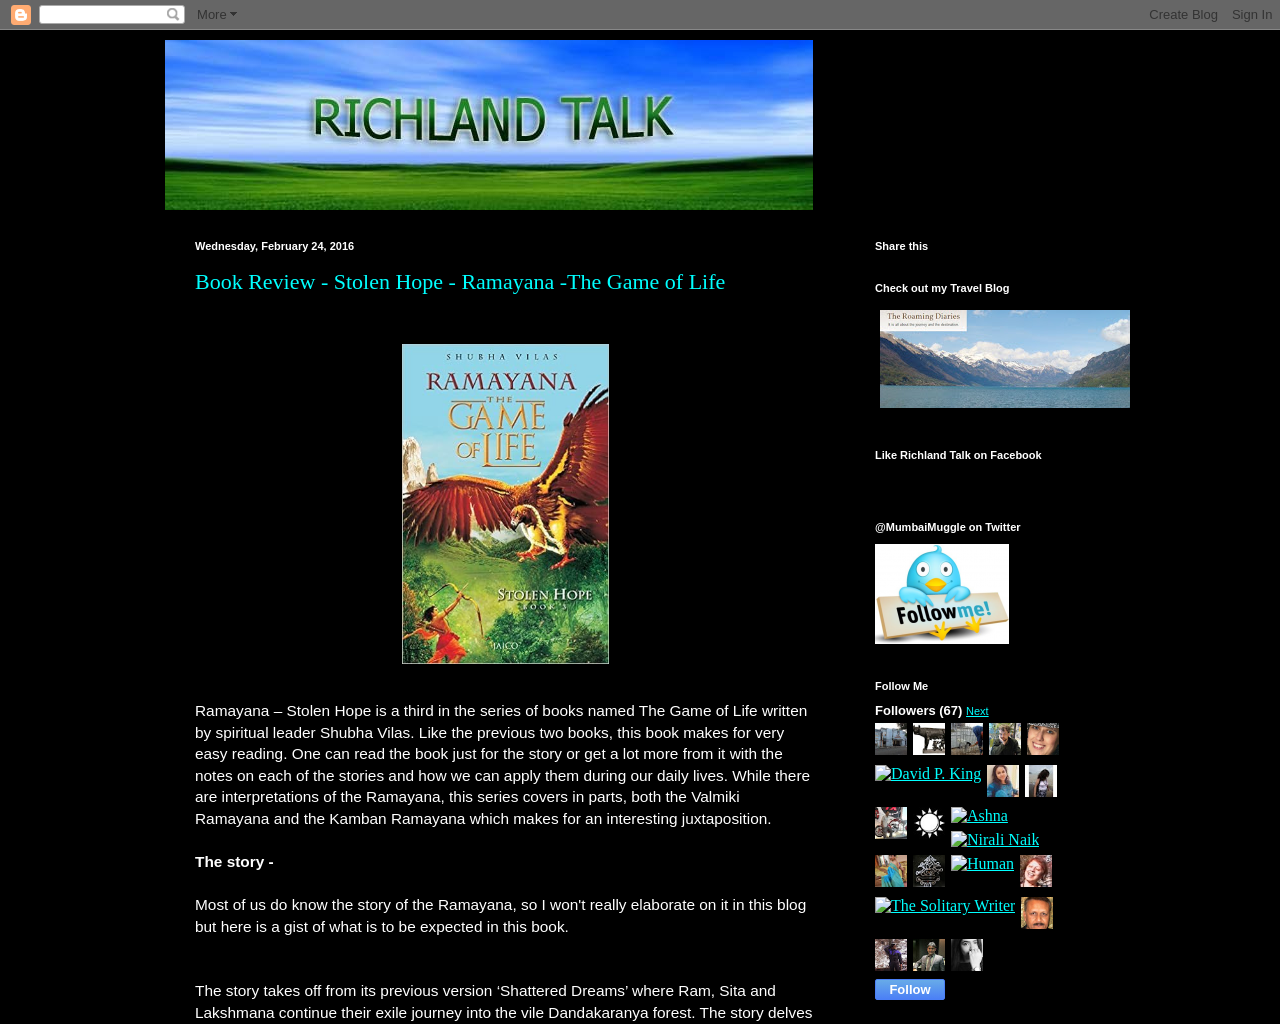 Richland Talk